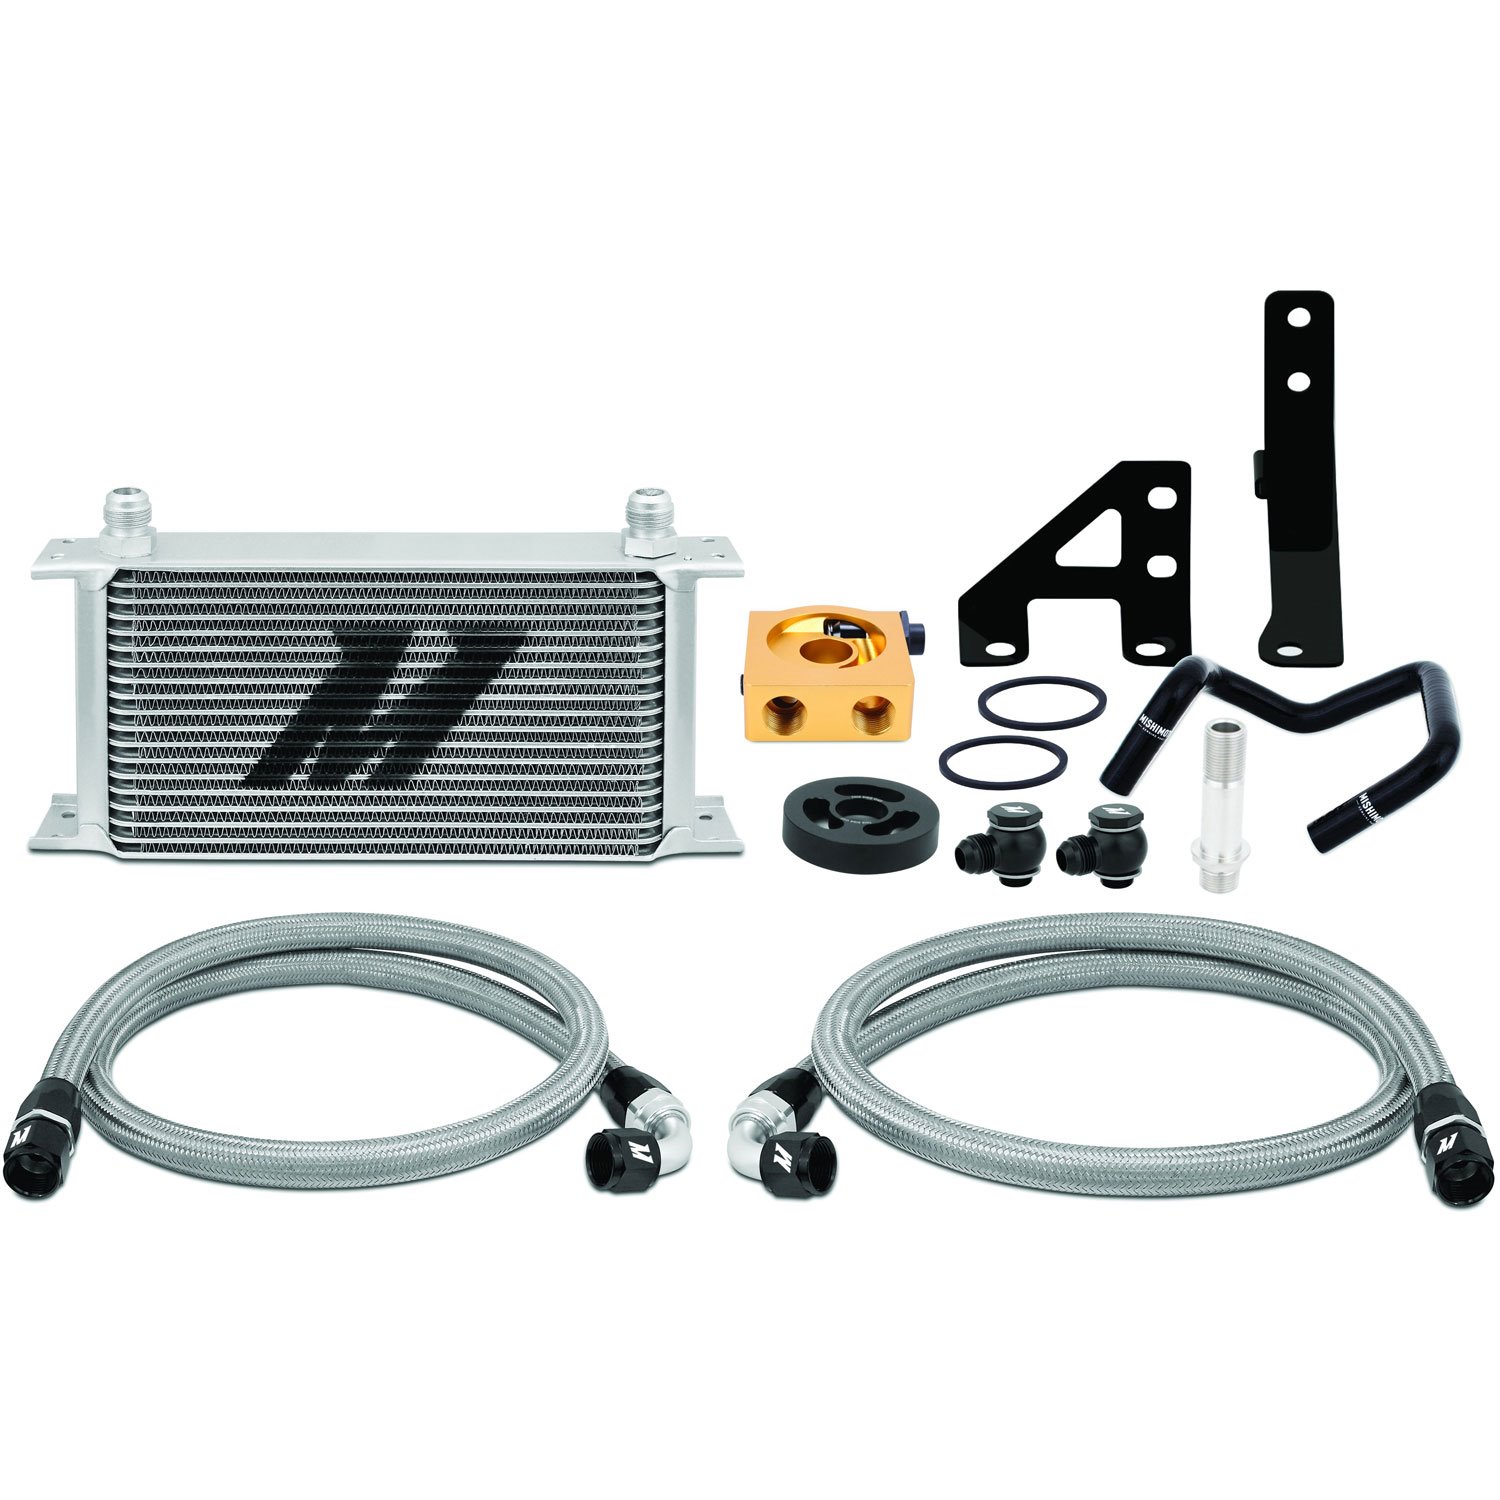 Subaru WRX Thermostatic Oil Cooler Kit - MFG Part No. MMOC-WRX-15T